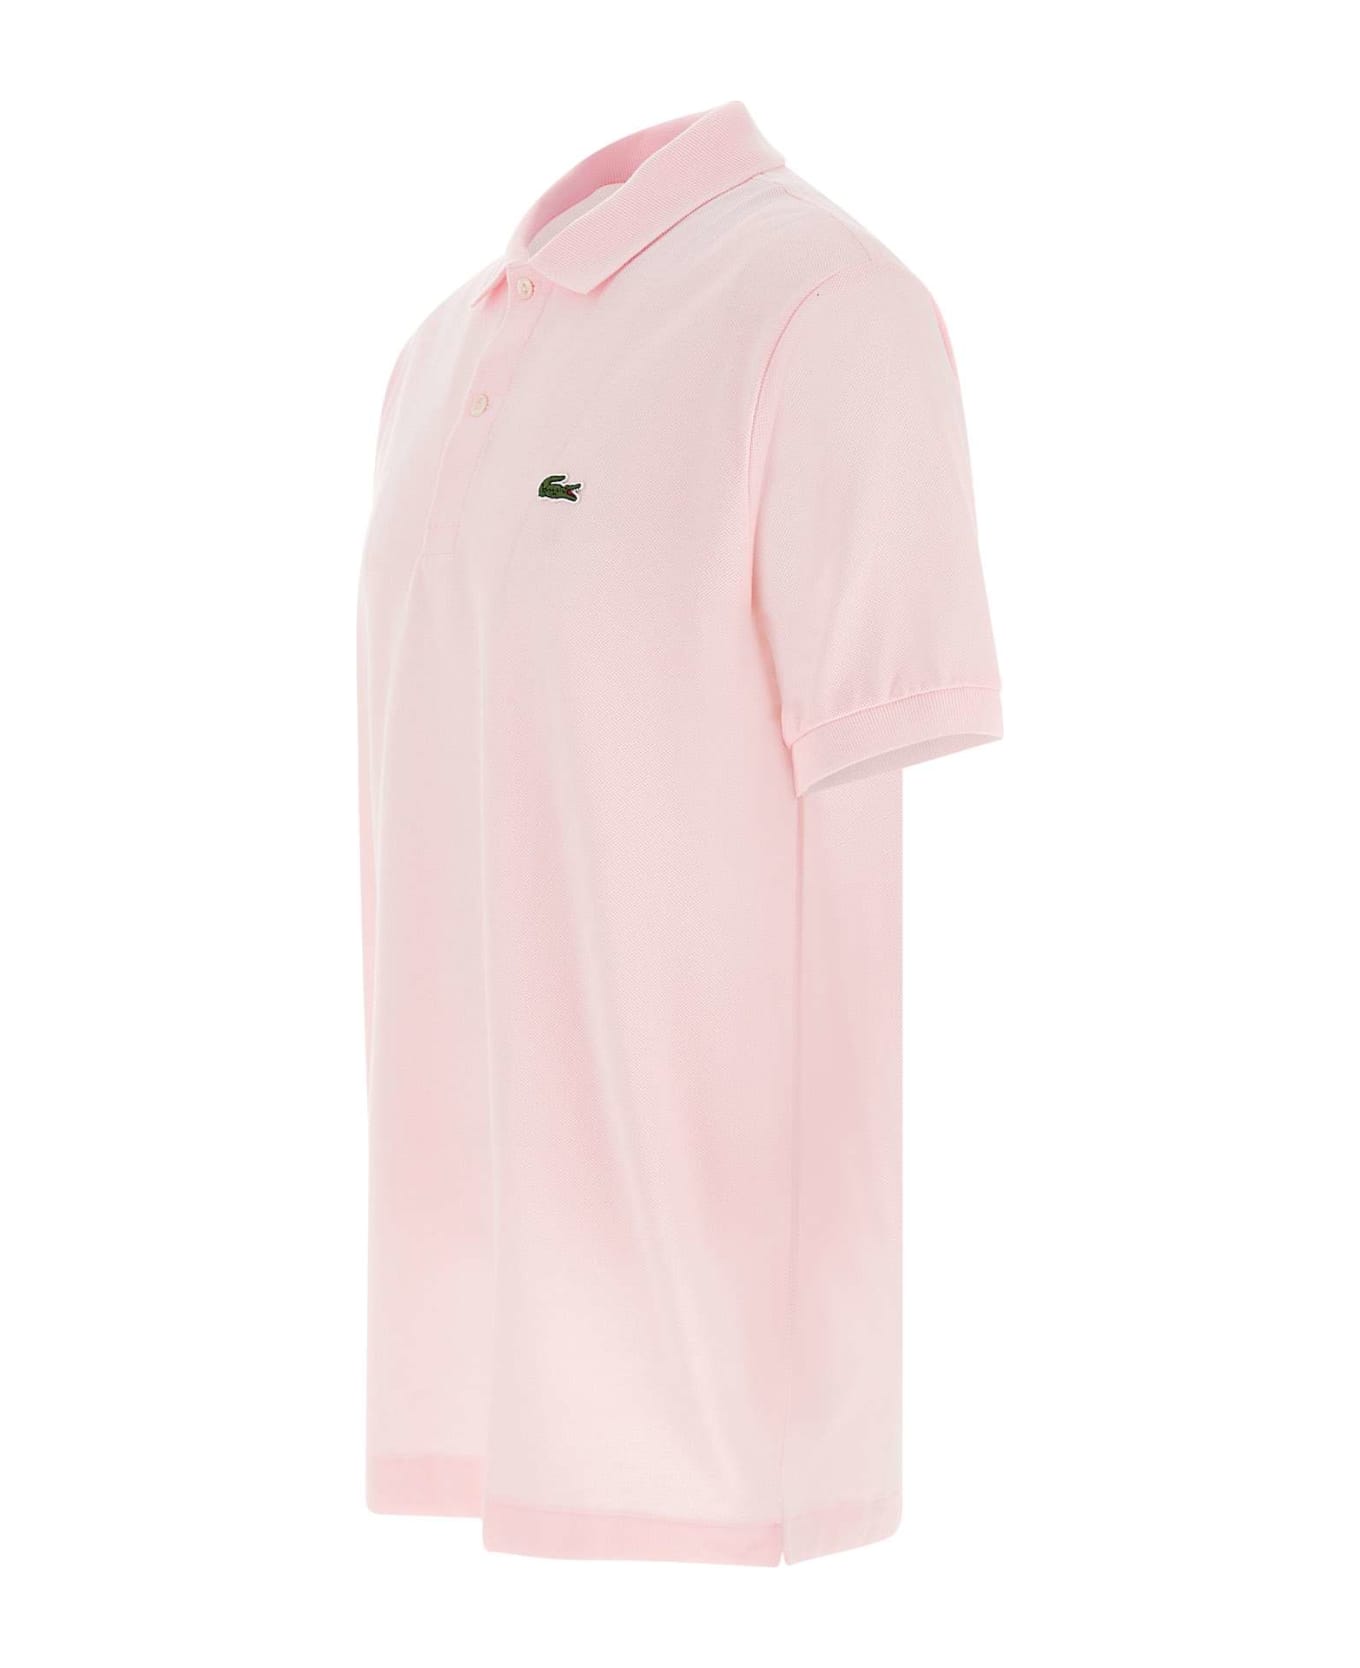 Lacoste Cotton Piquet Polo Shirt - PINK ポロシャツ